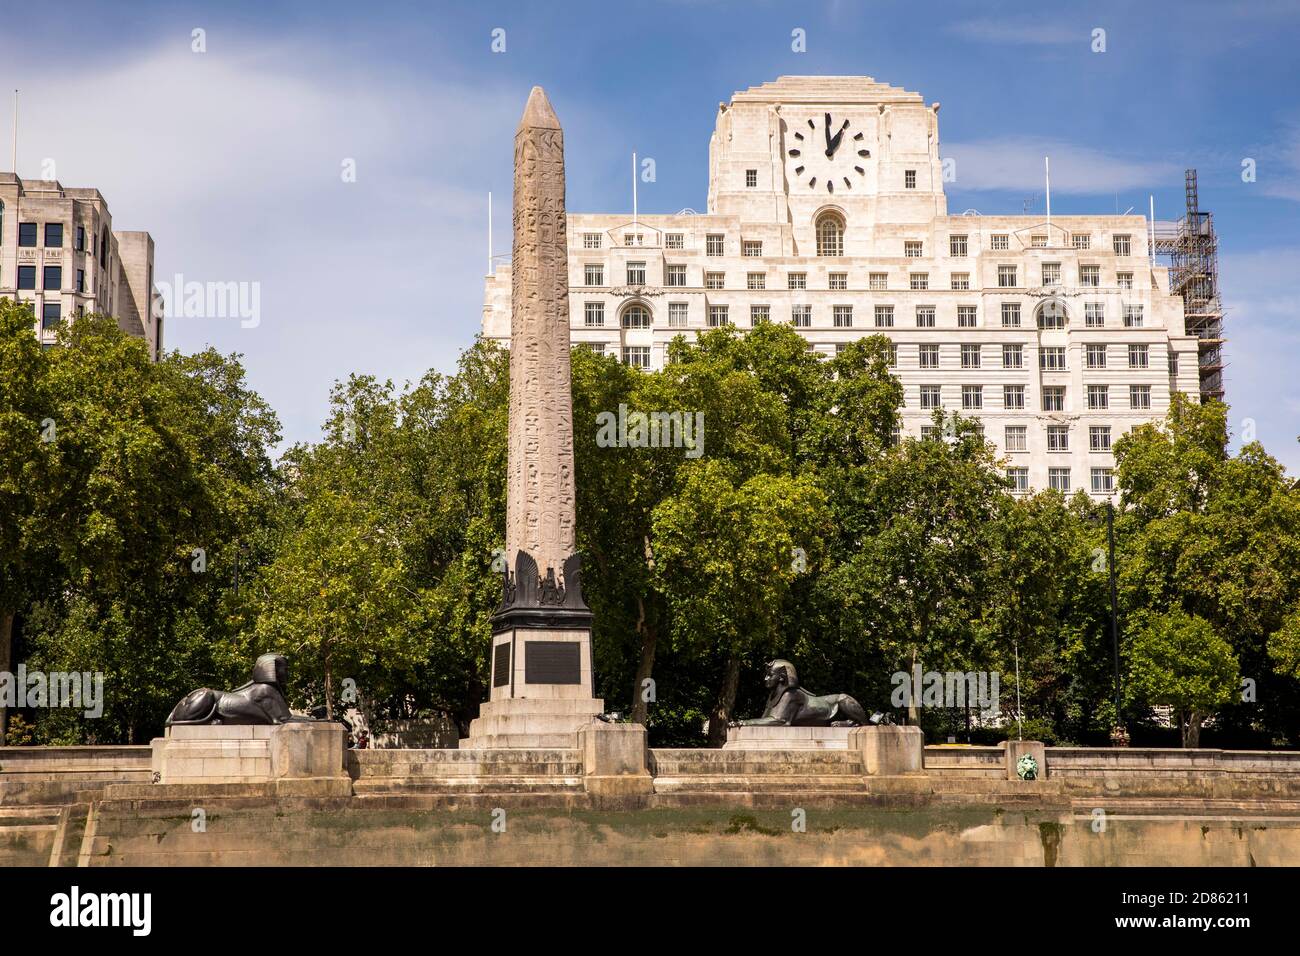 Großbritannien, London, Victoria Embankment, Cleopatras Nadel, ägyptischer Obelisk neben der Themse Stockfoto